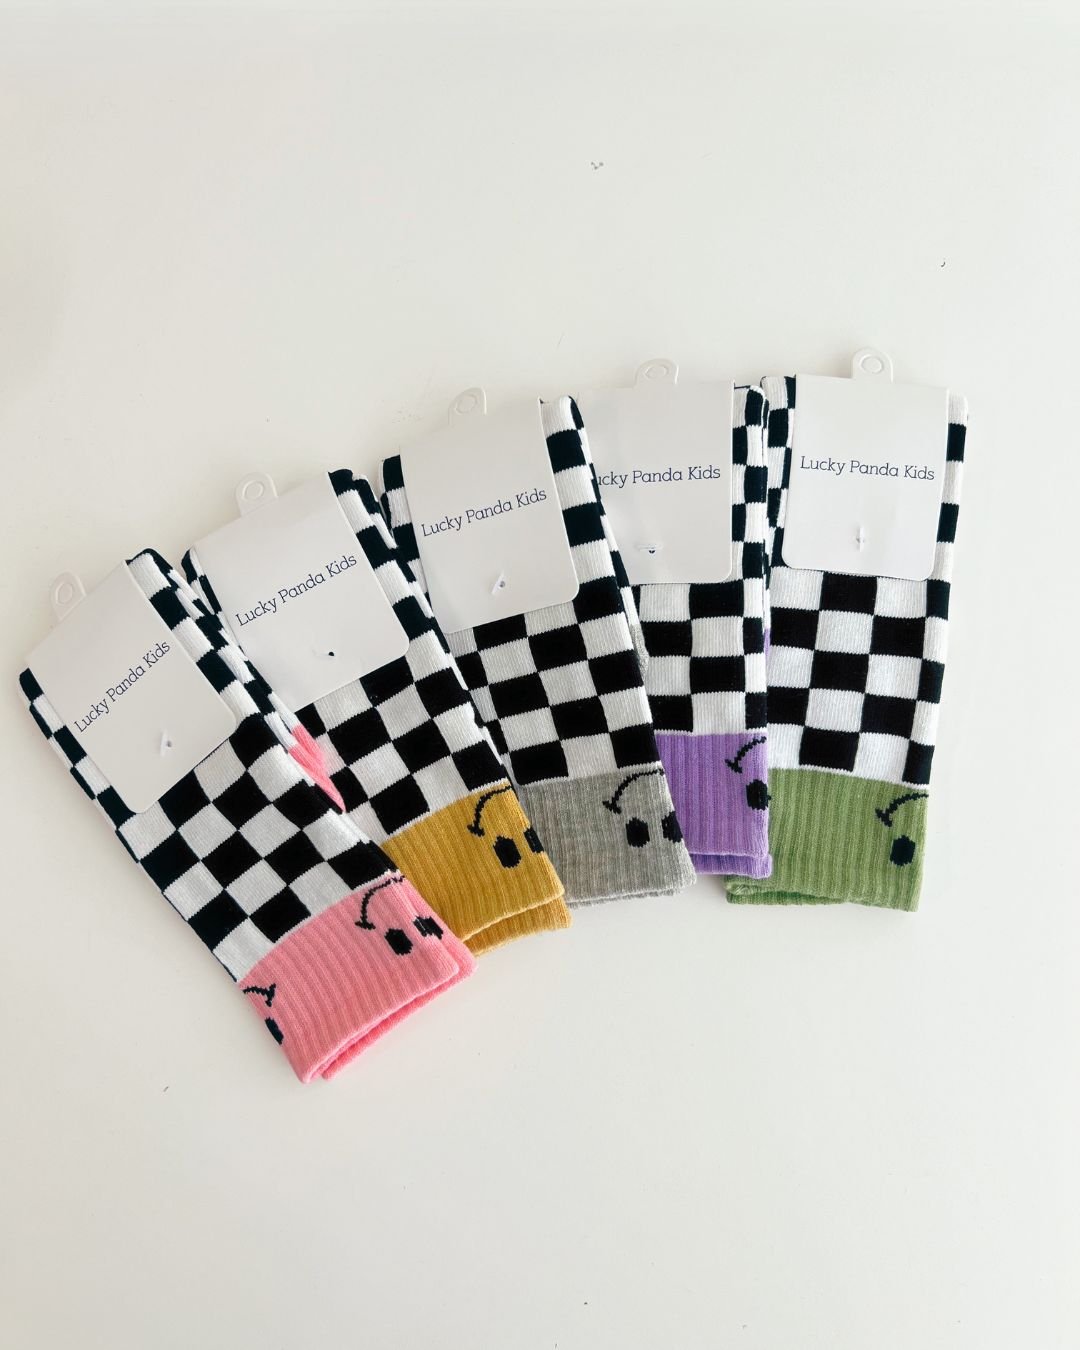 Checkered Smiley Socks | Pink